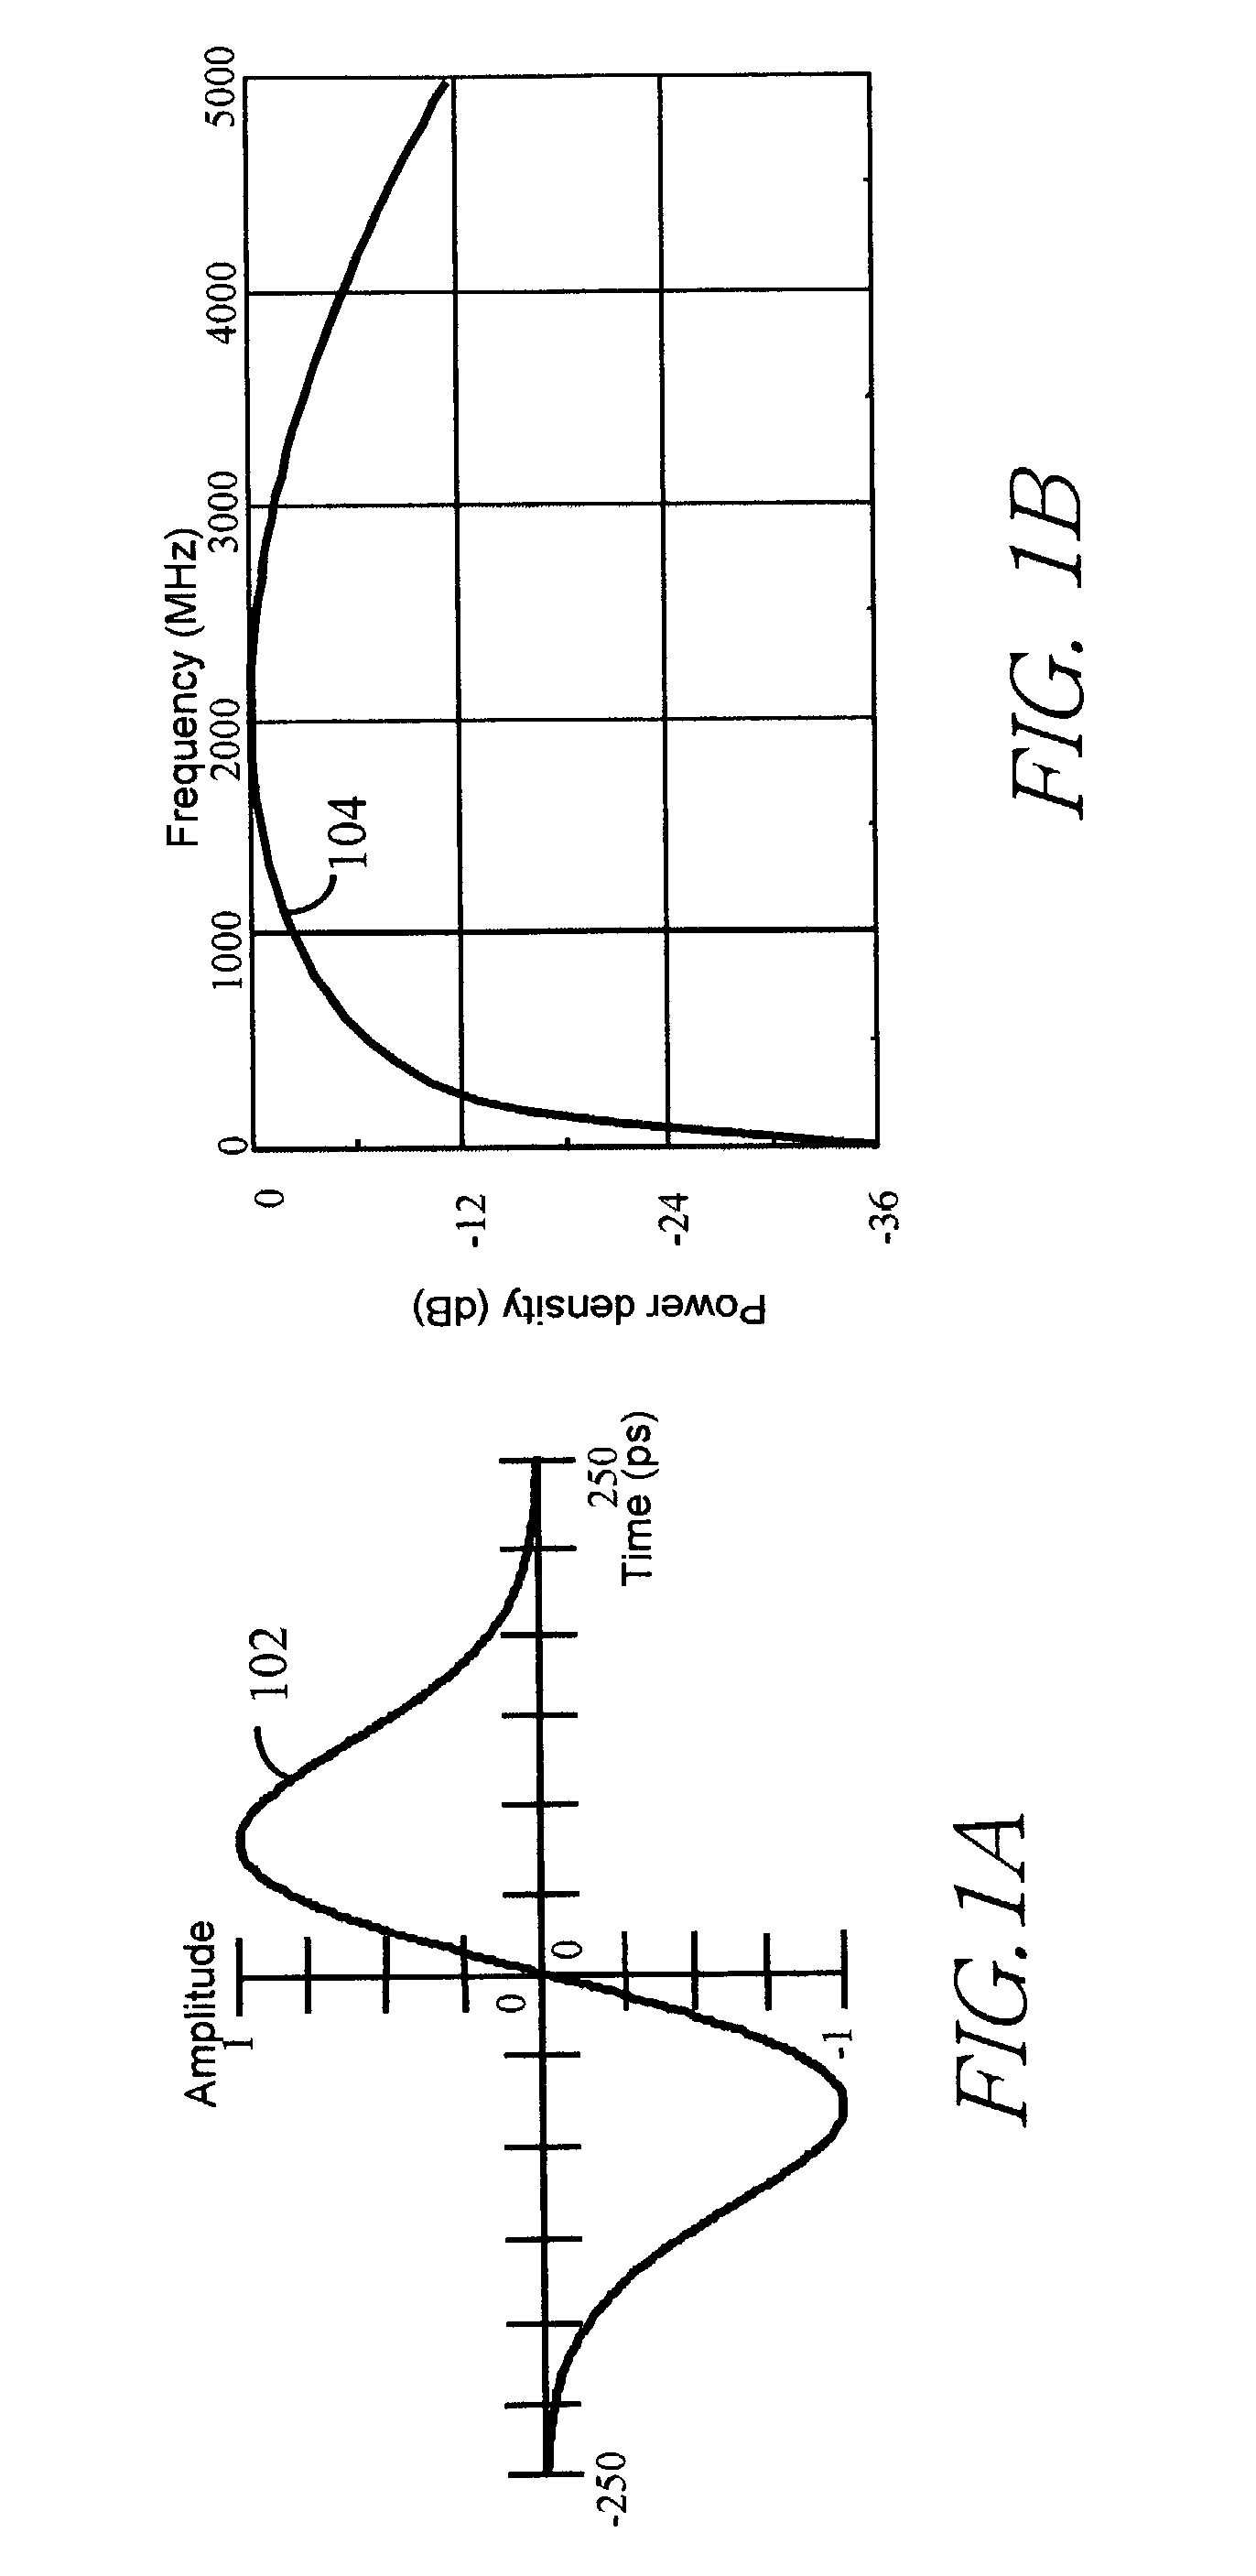 Method and apparatus for impulse radio transceiver calibration